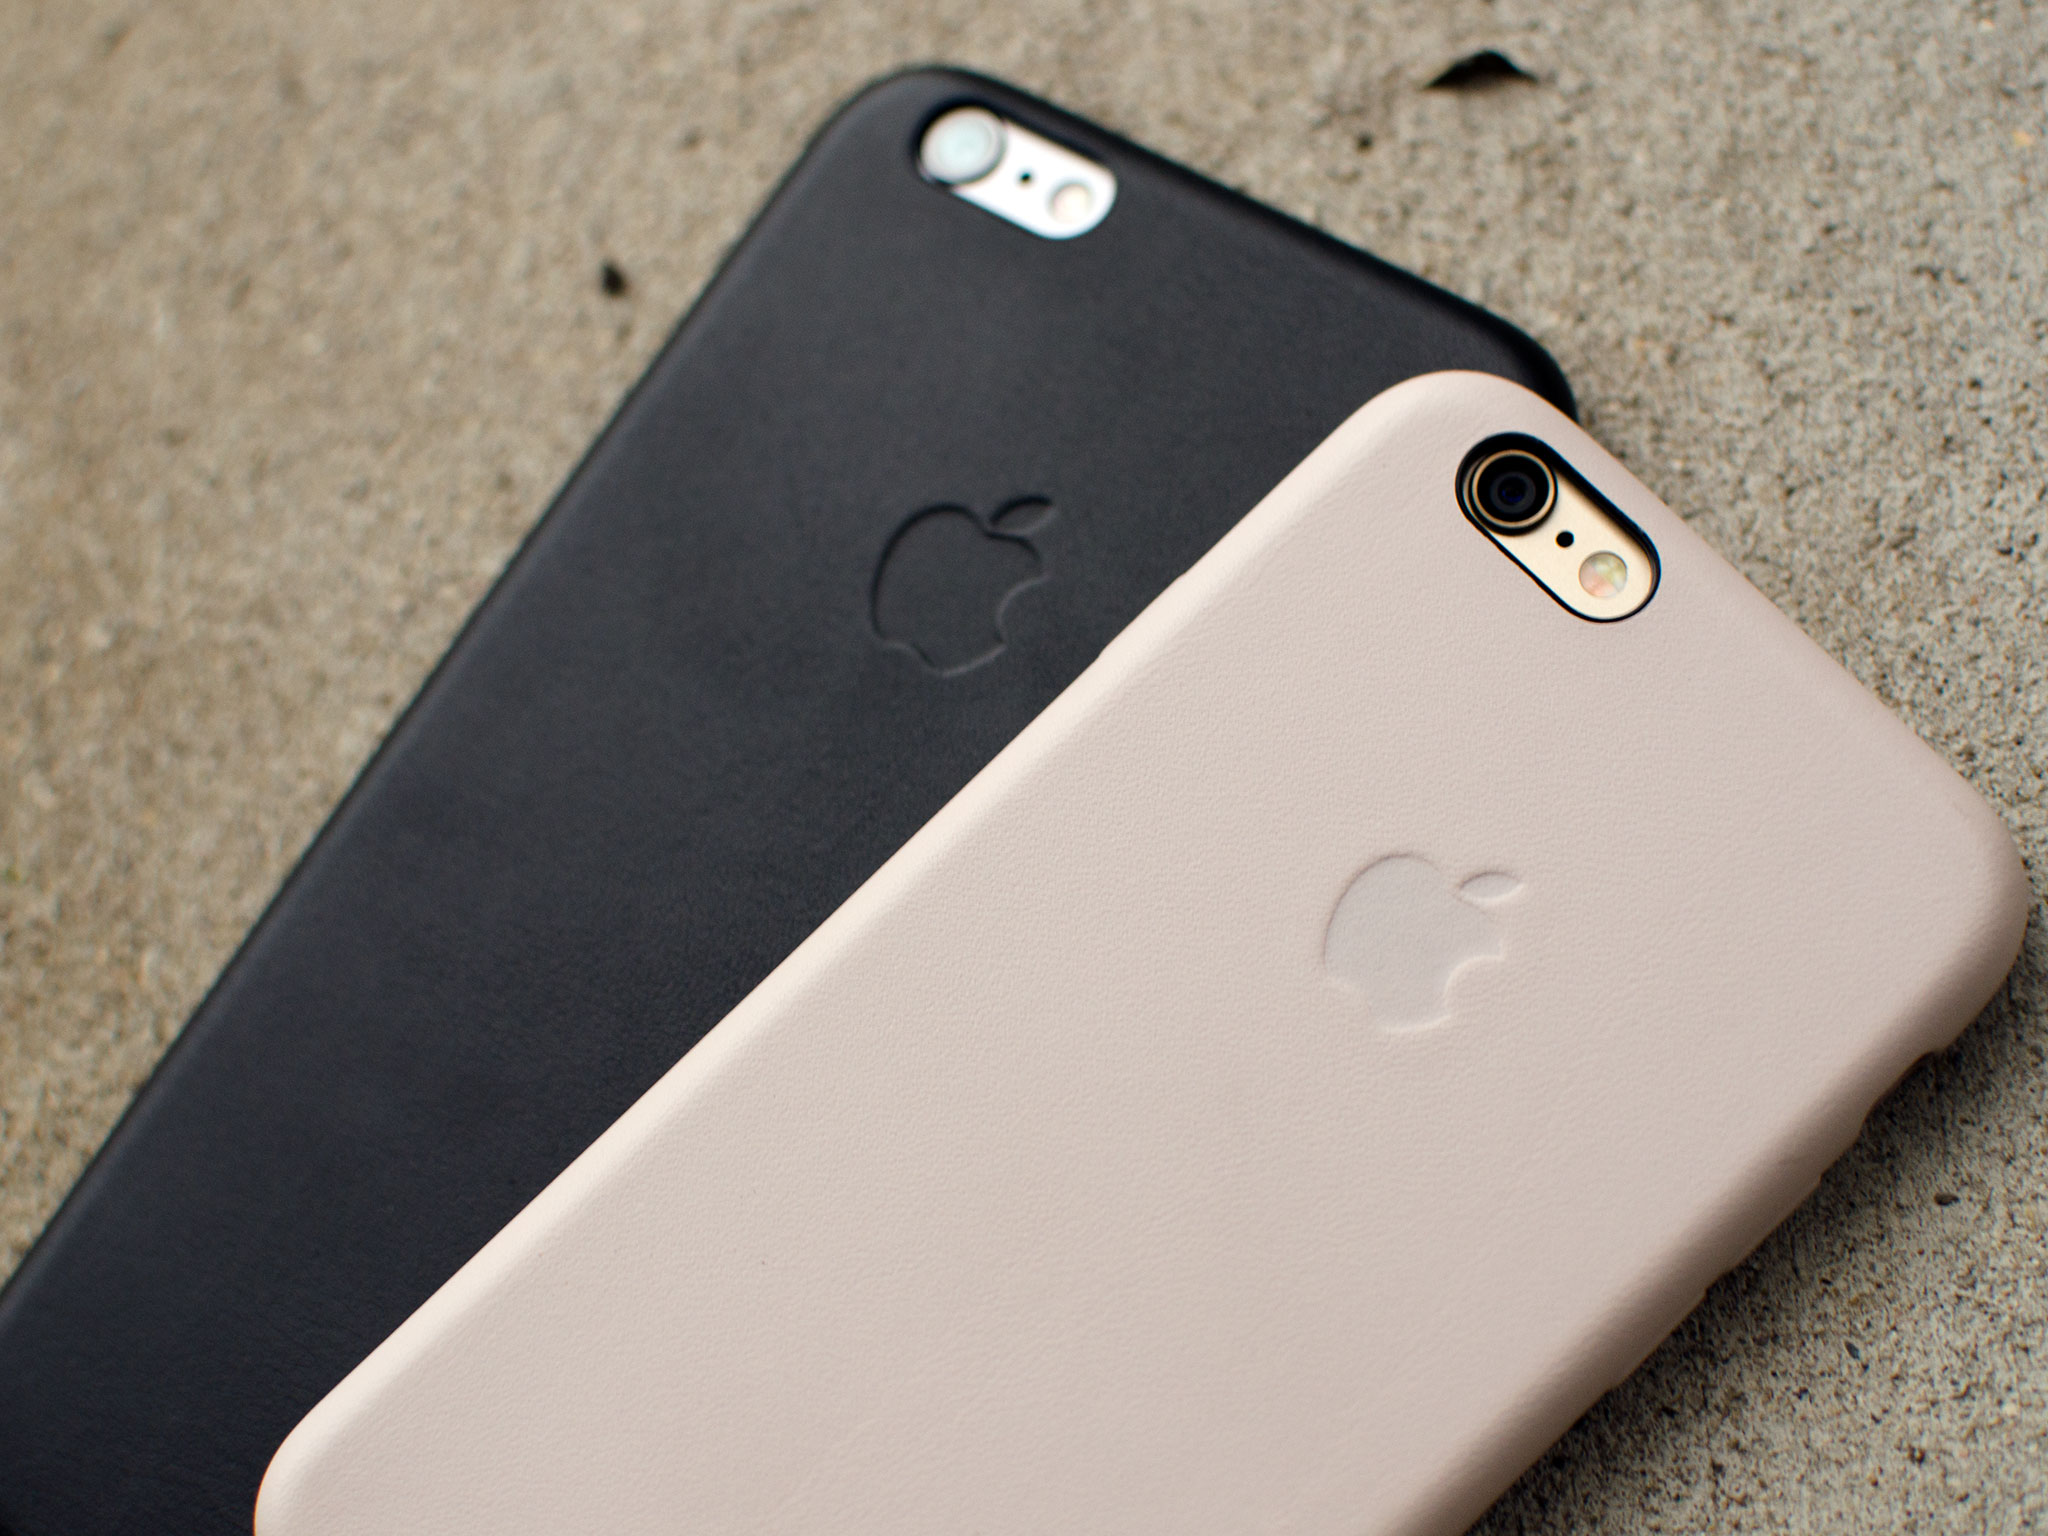 Do iPhone 7 Plus cases fit the 6 Plus?